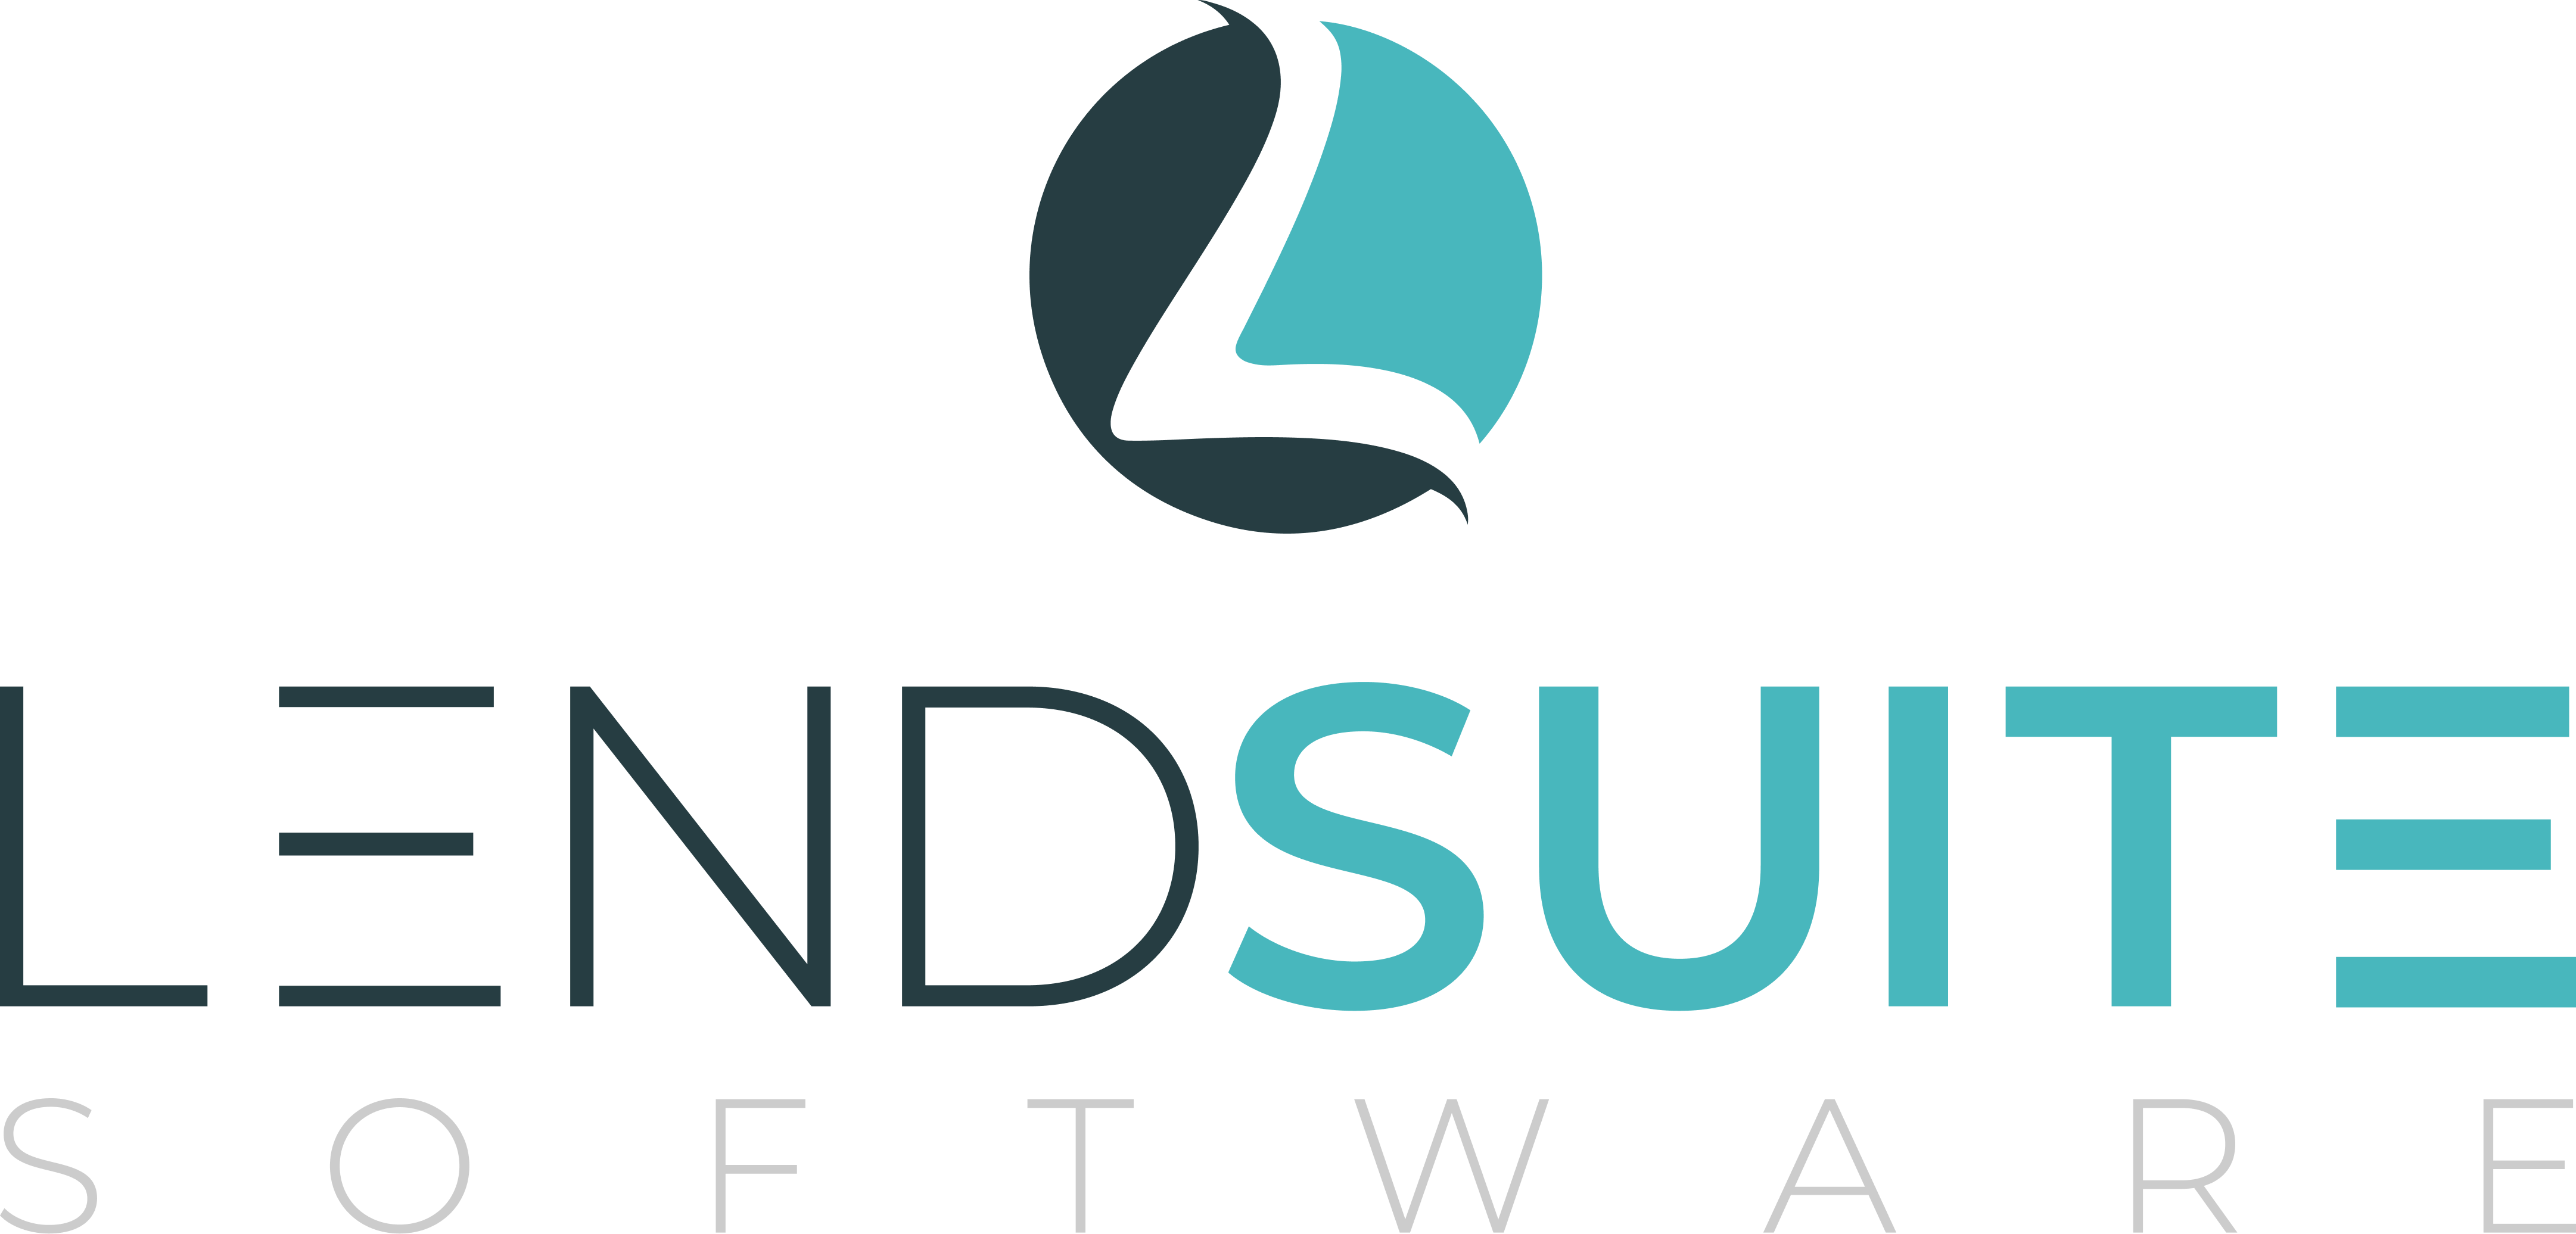 LendSuite Logo